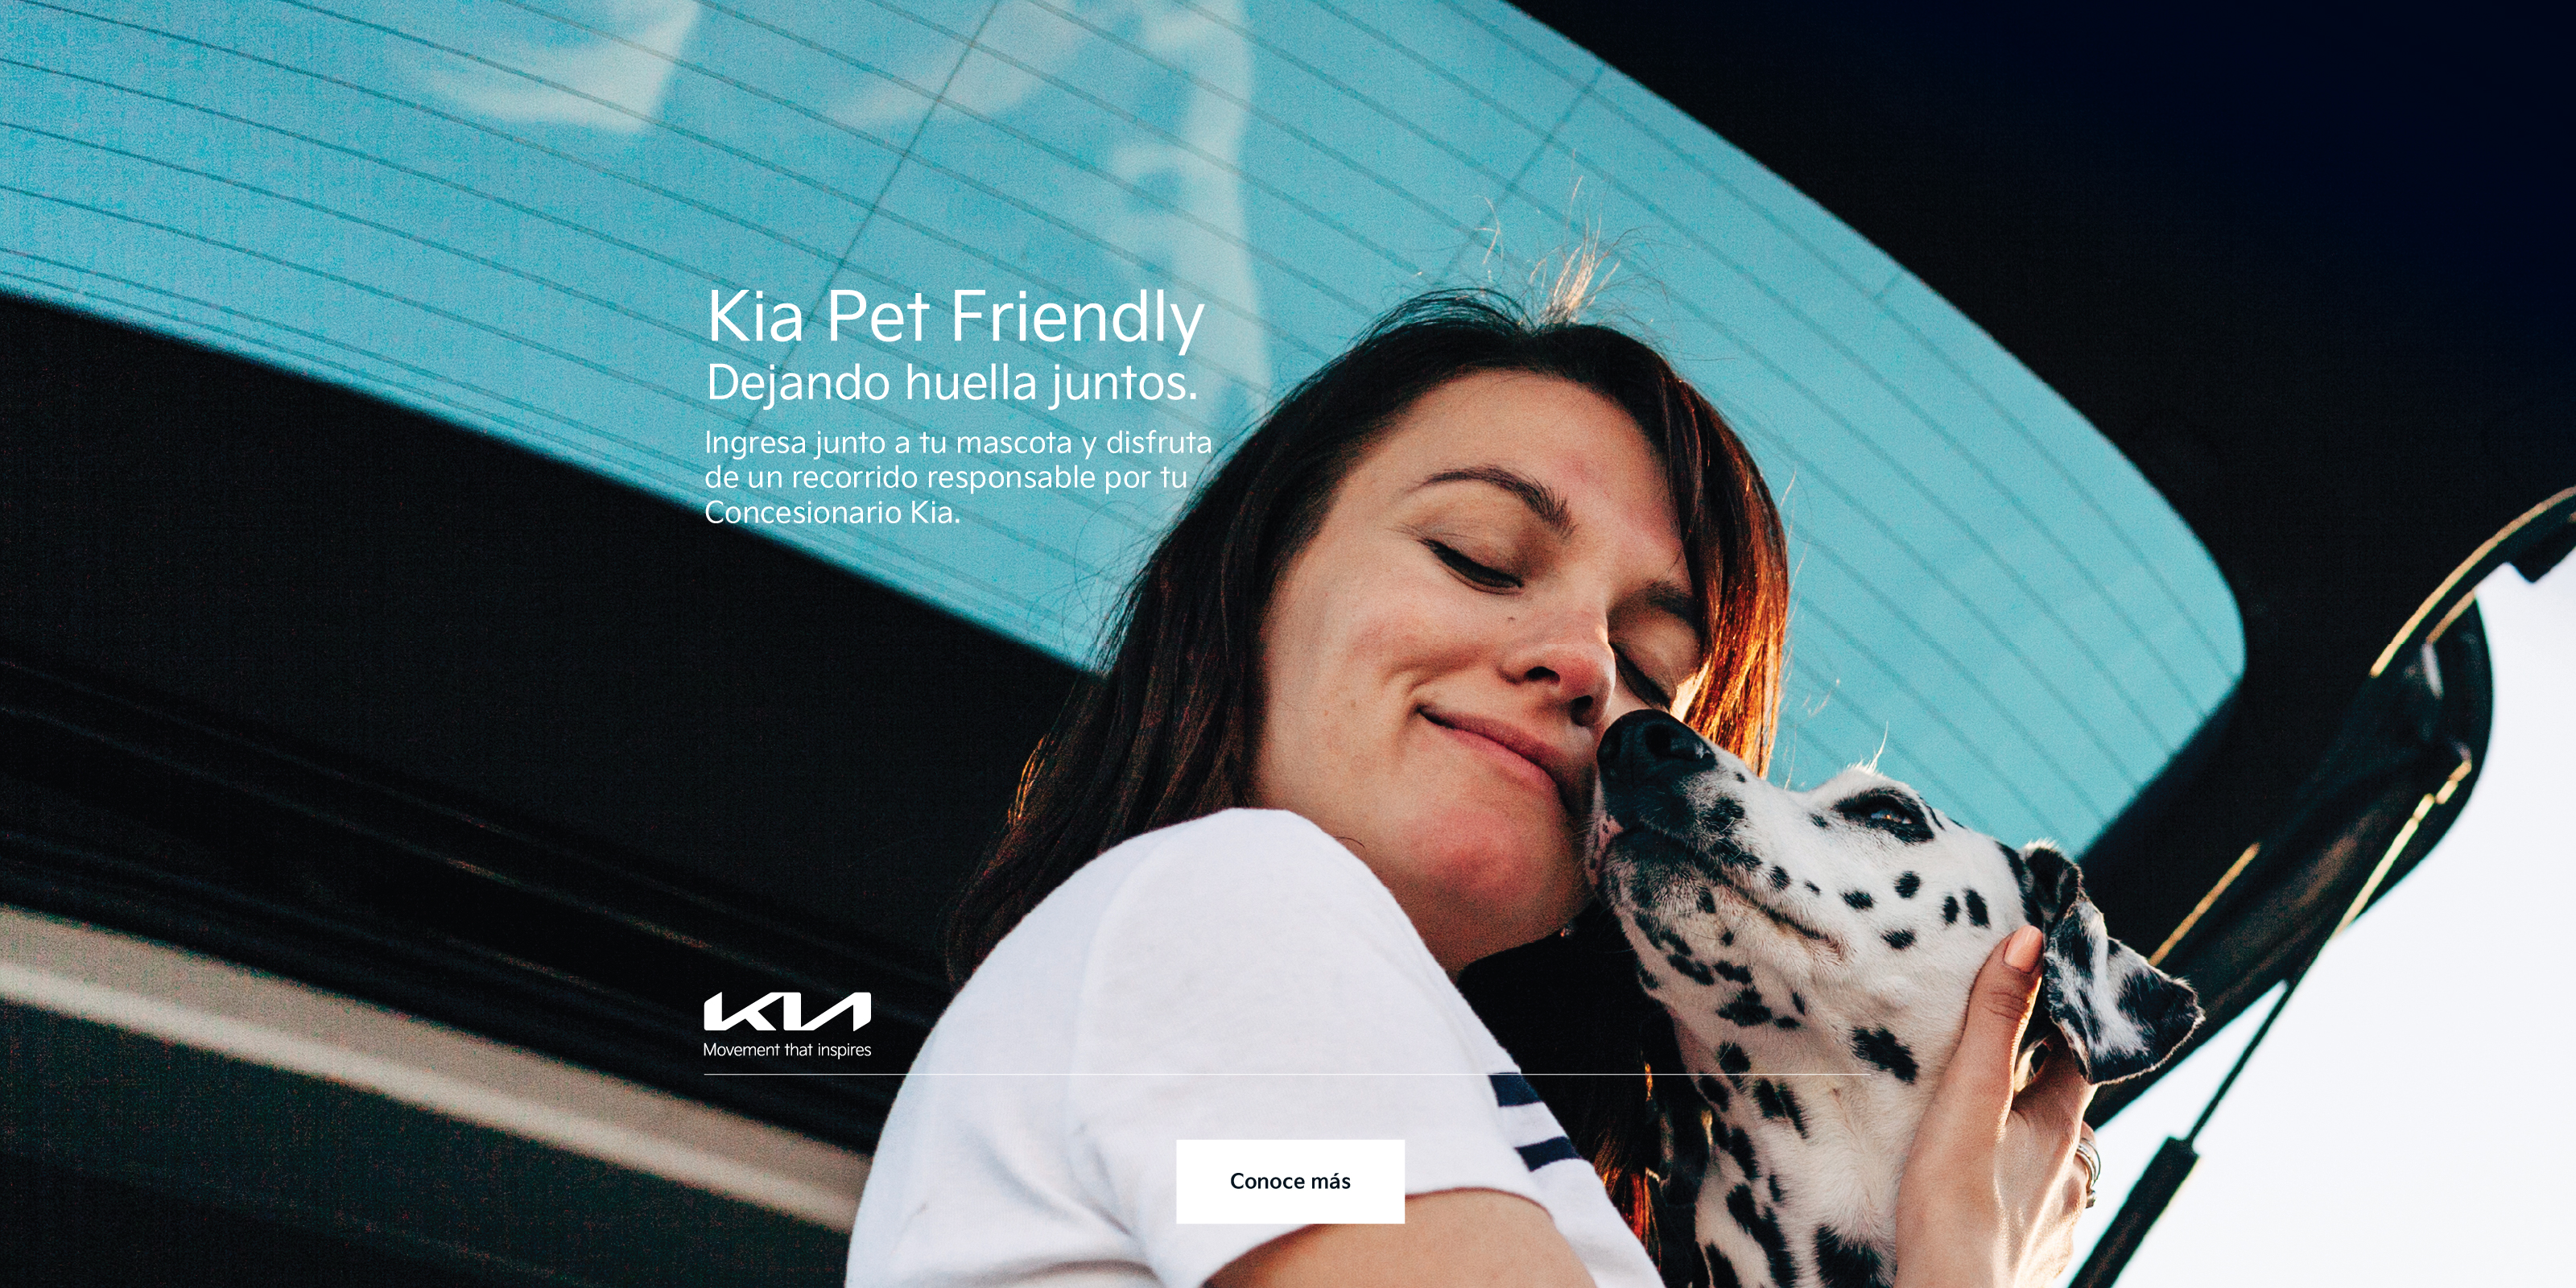 Kia Pet friendly